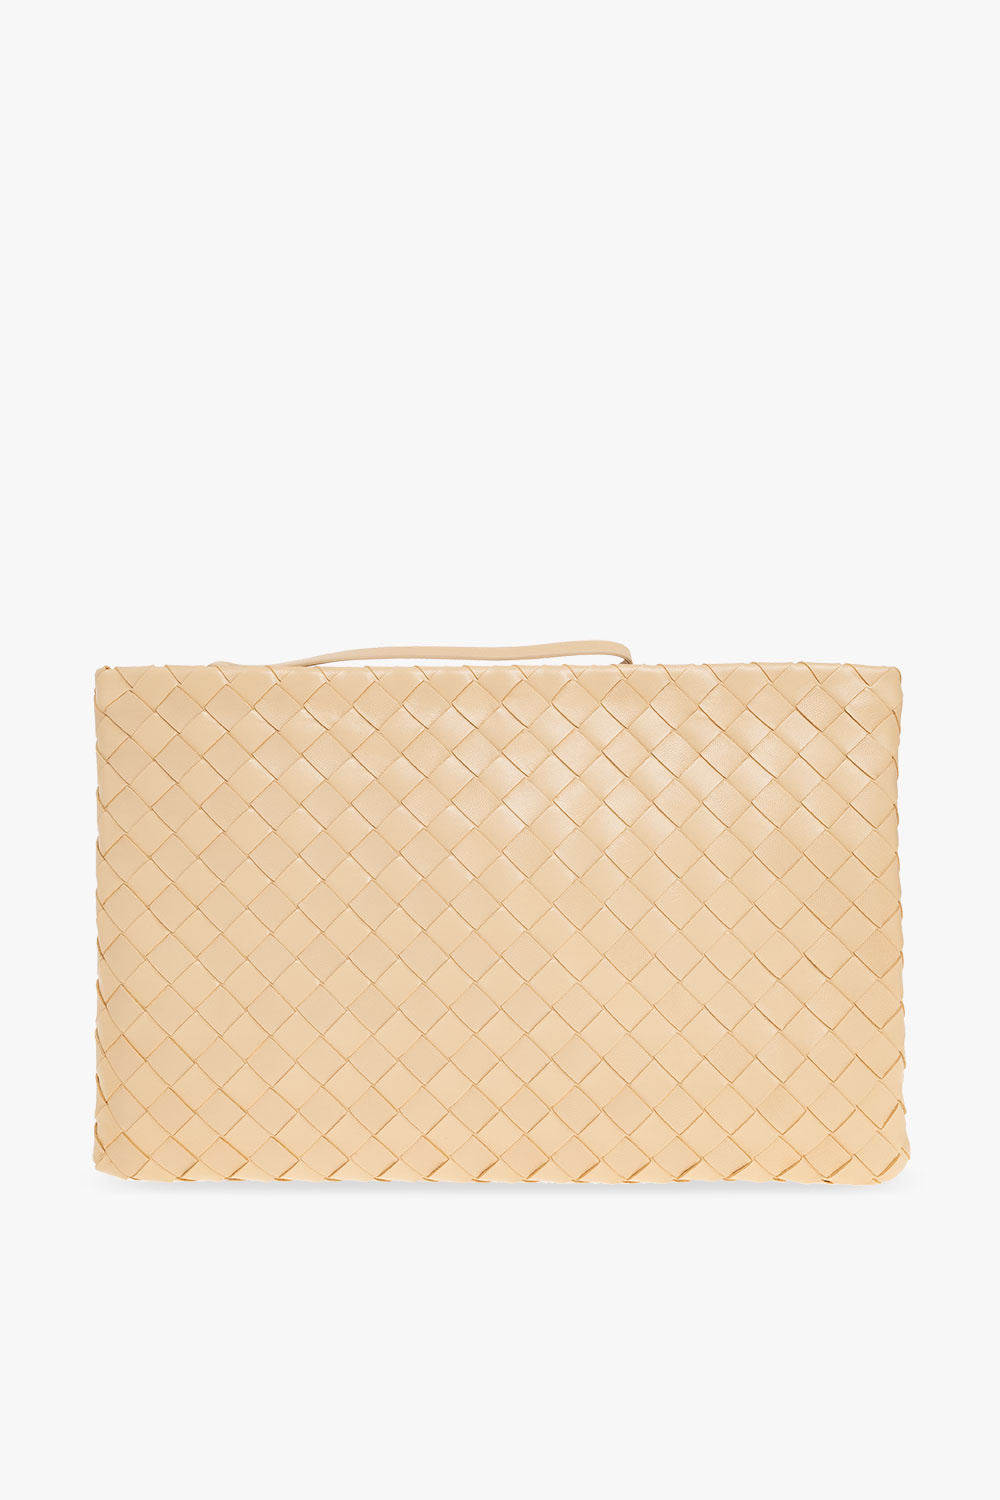 Bottega Veneta ‘Pouch Large’ handbag